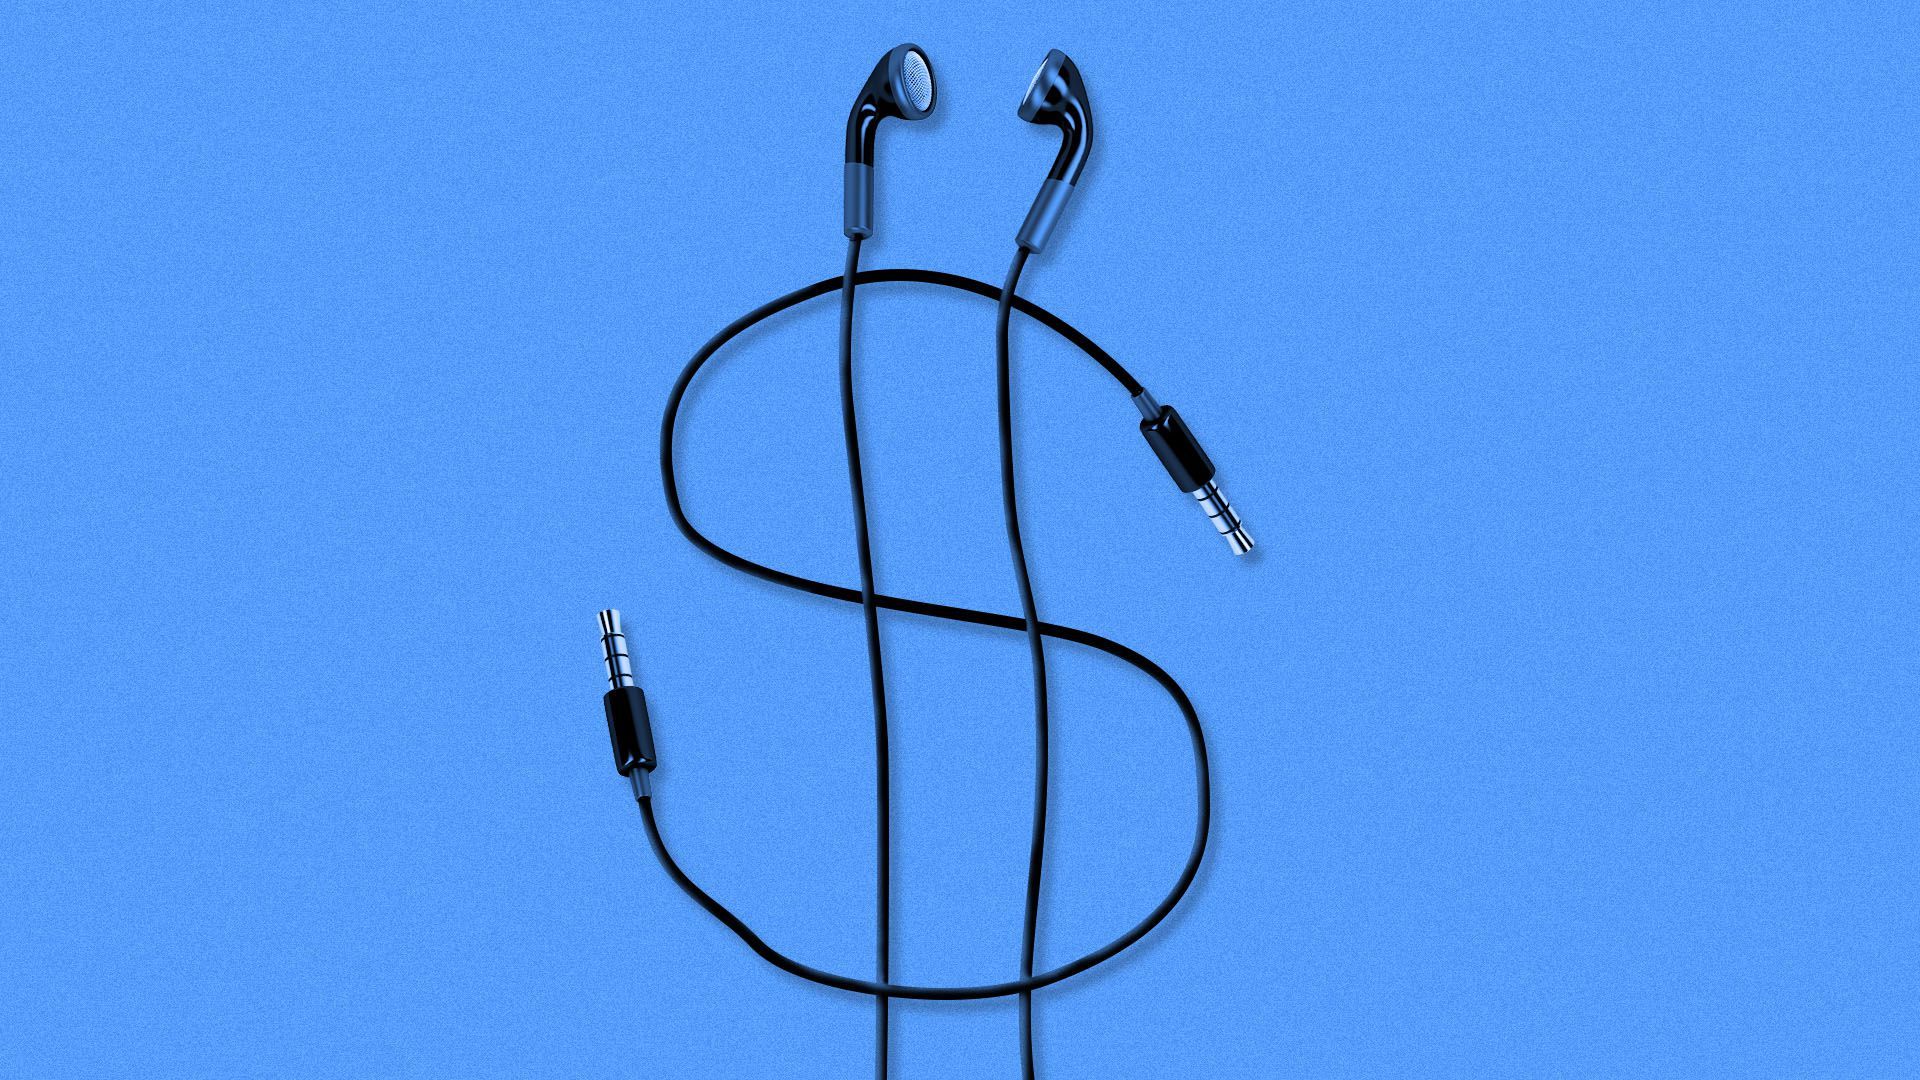 Illustration of headphones in the shape of money